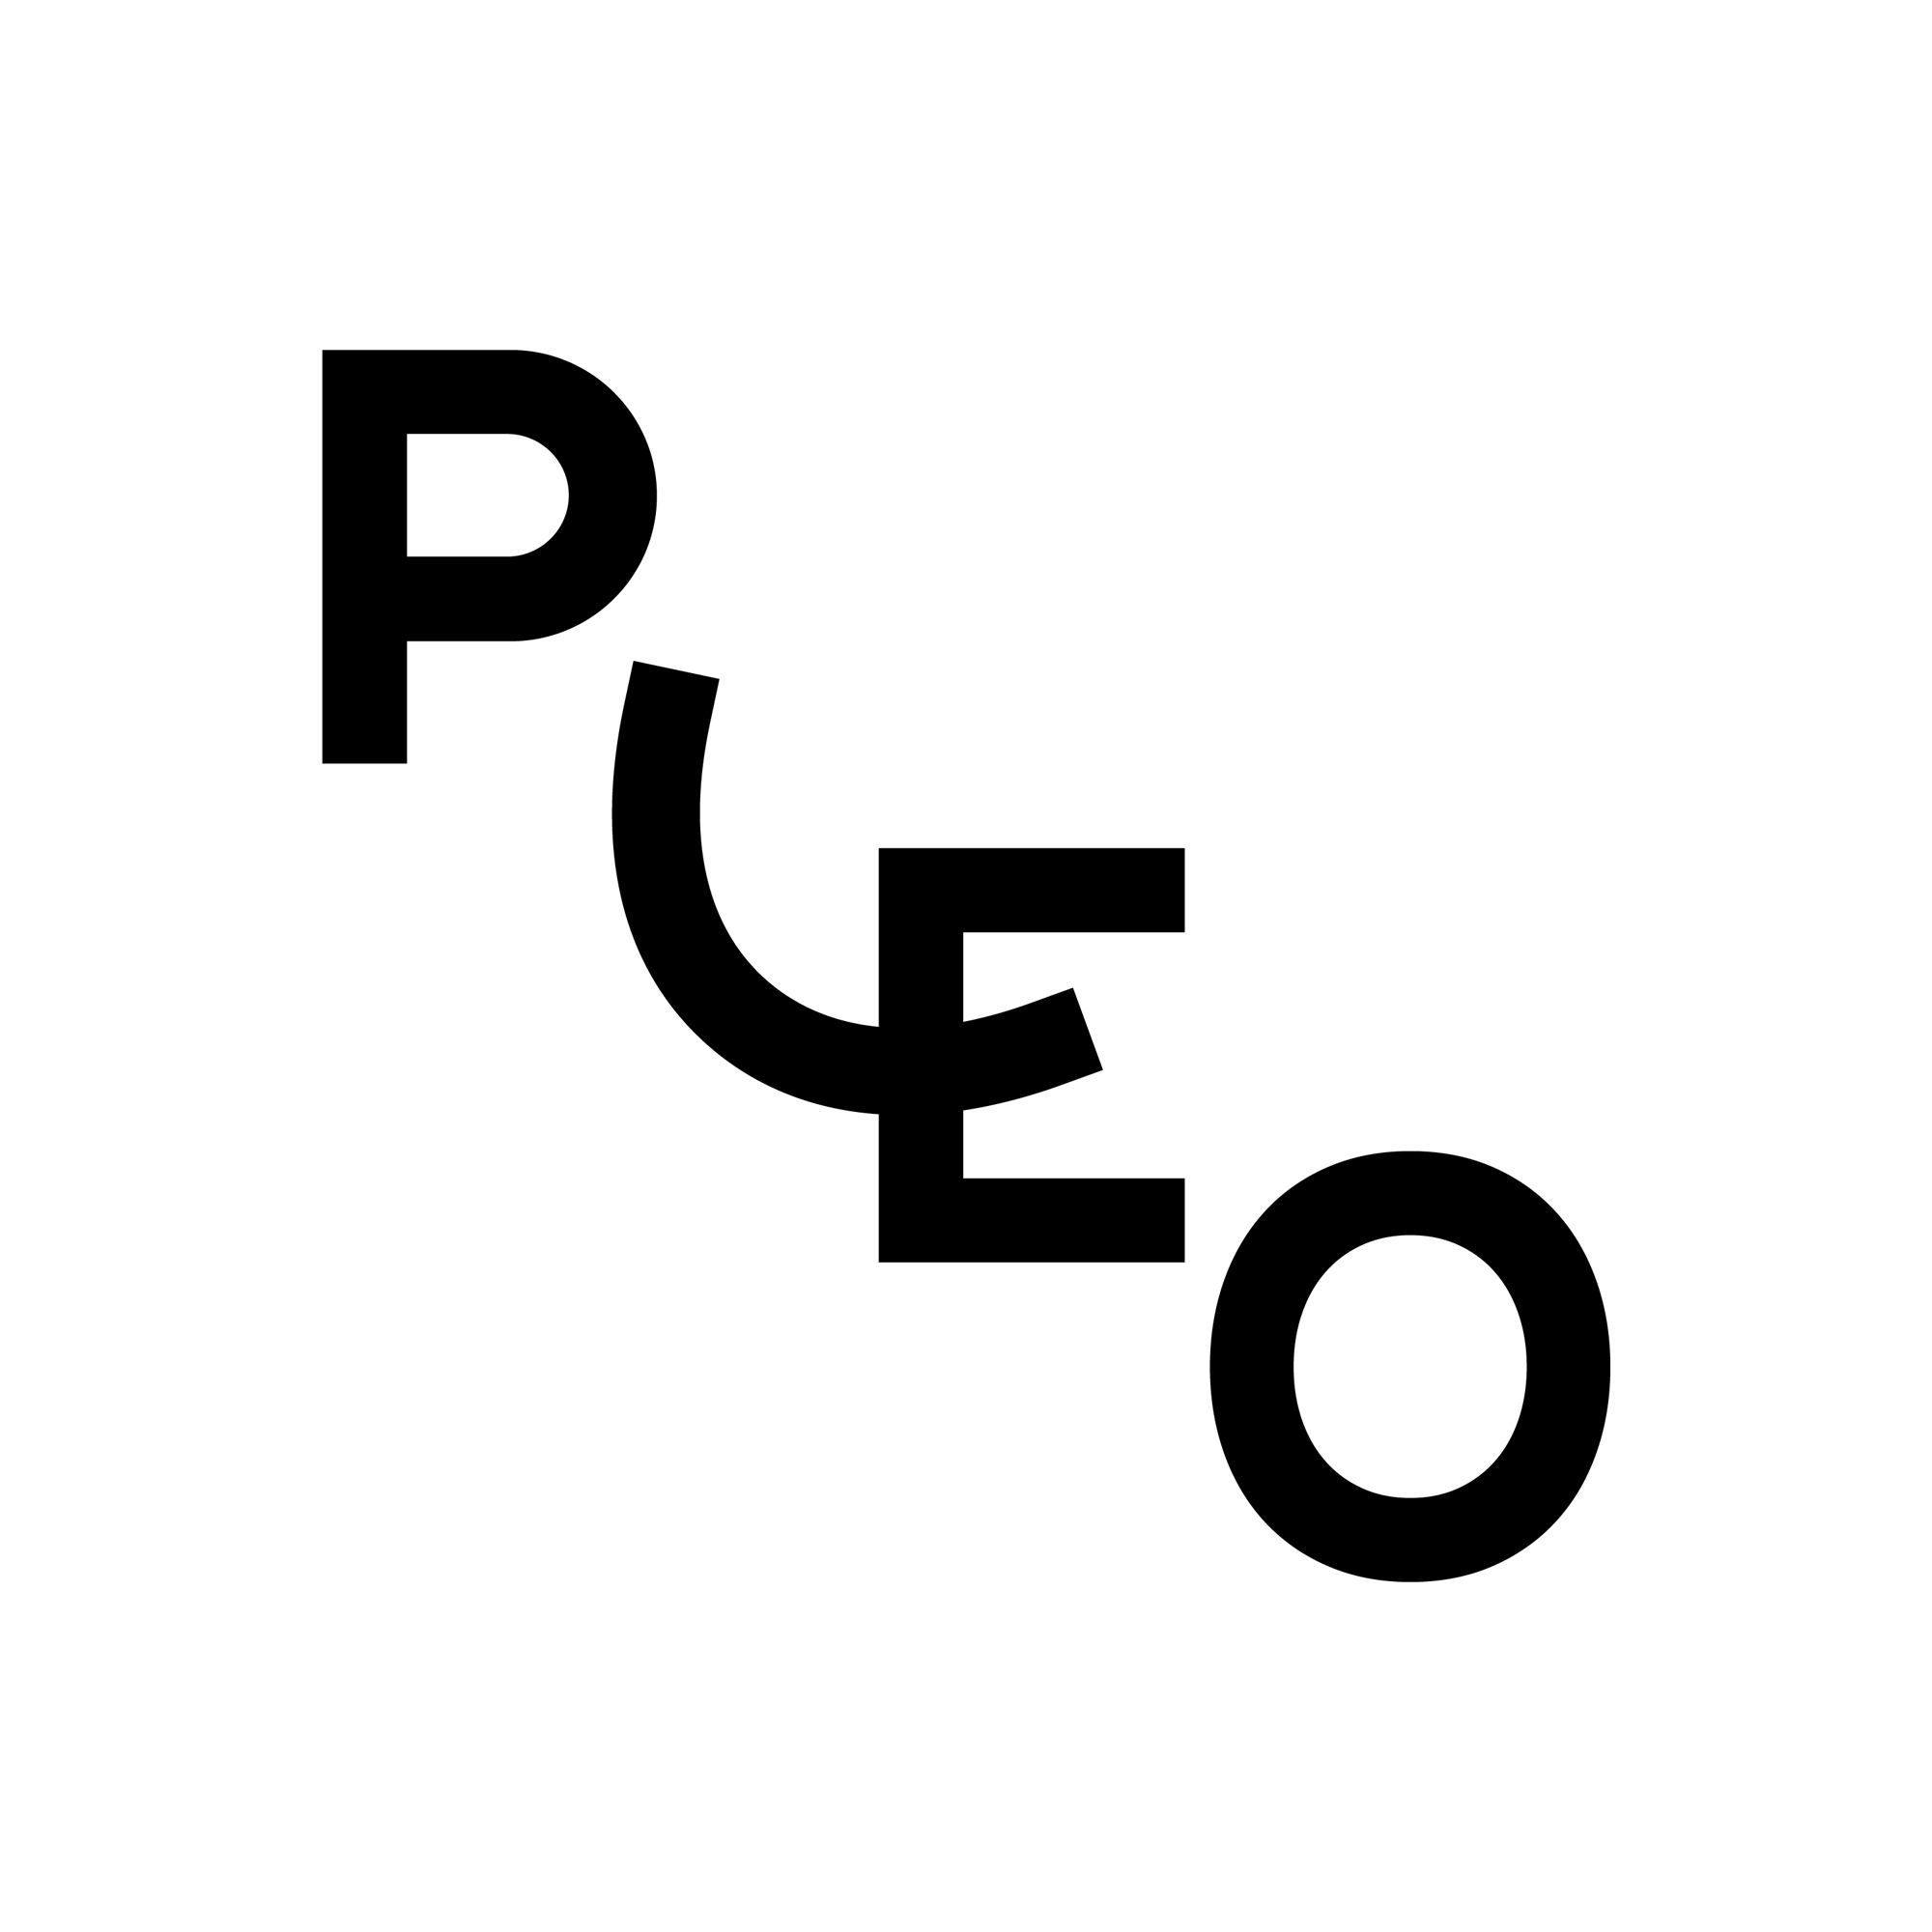 New Logo and Identity for Pleo by Koto